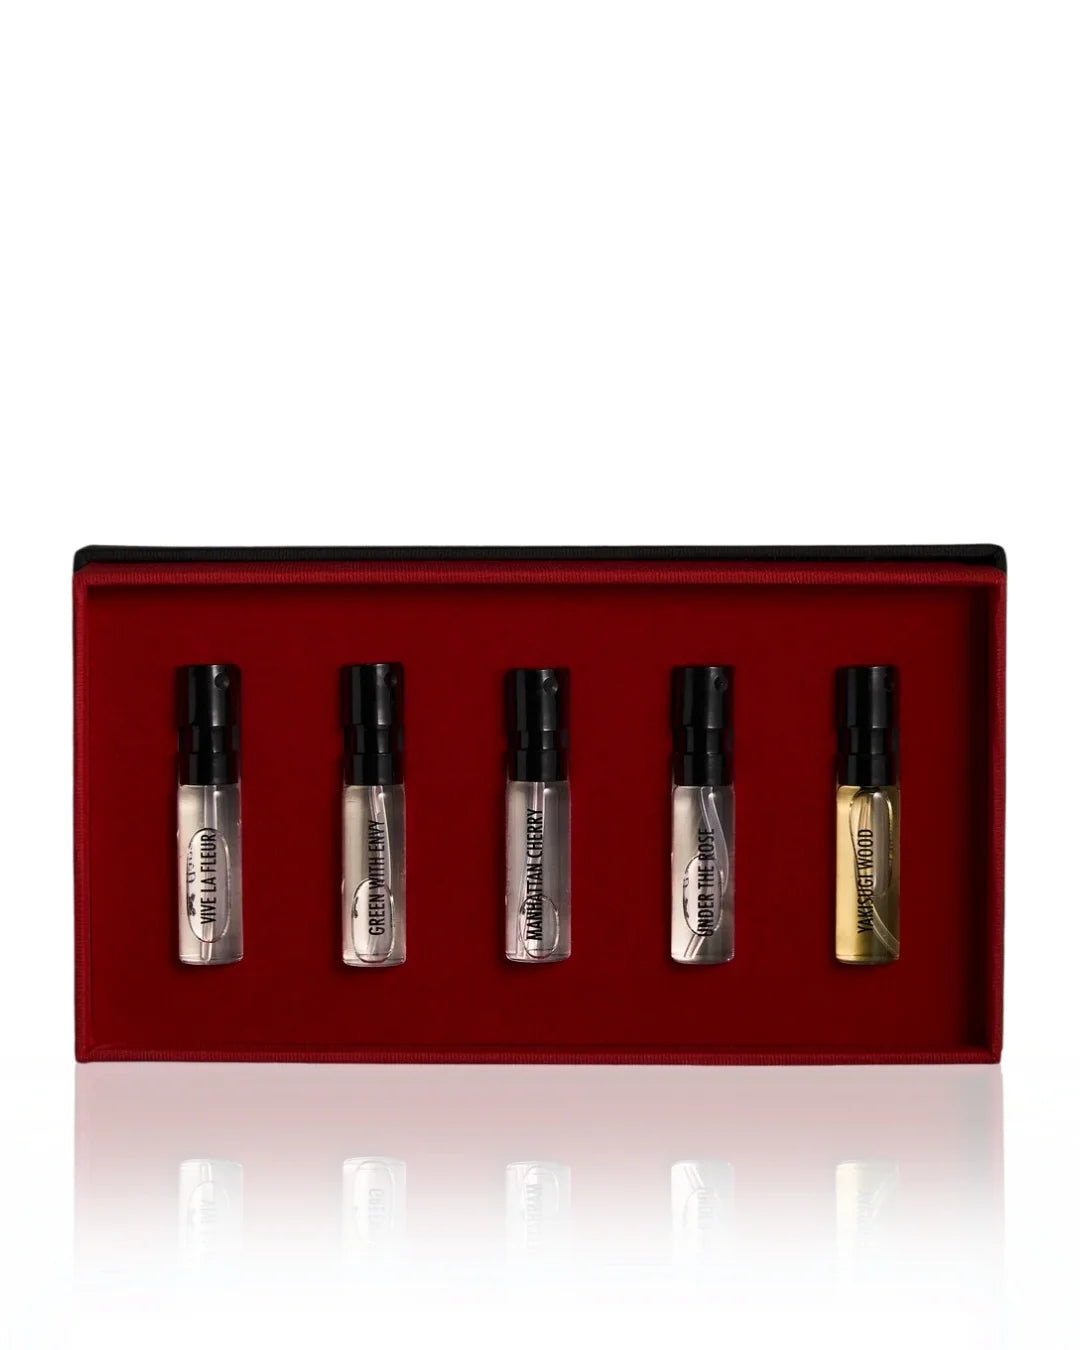 Flaner Fragrances - Perfume - Discovery Set